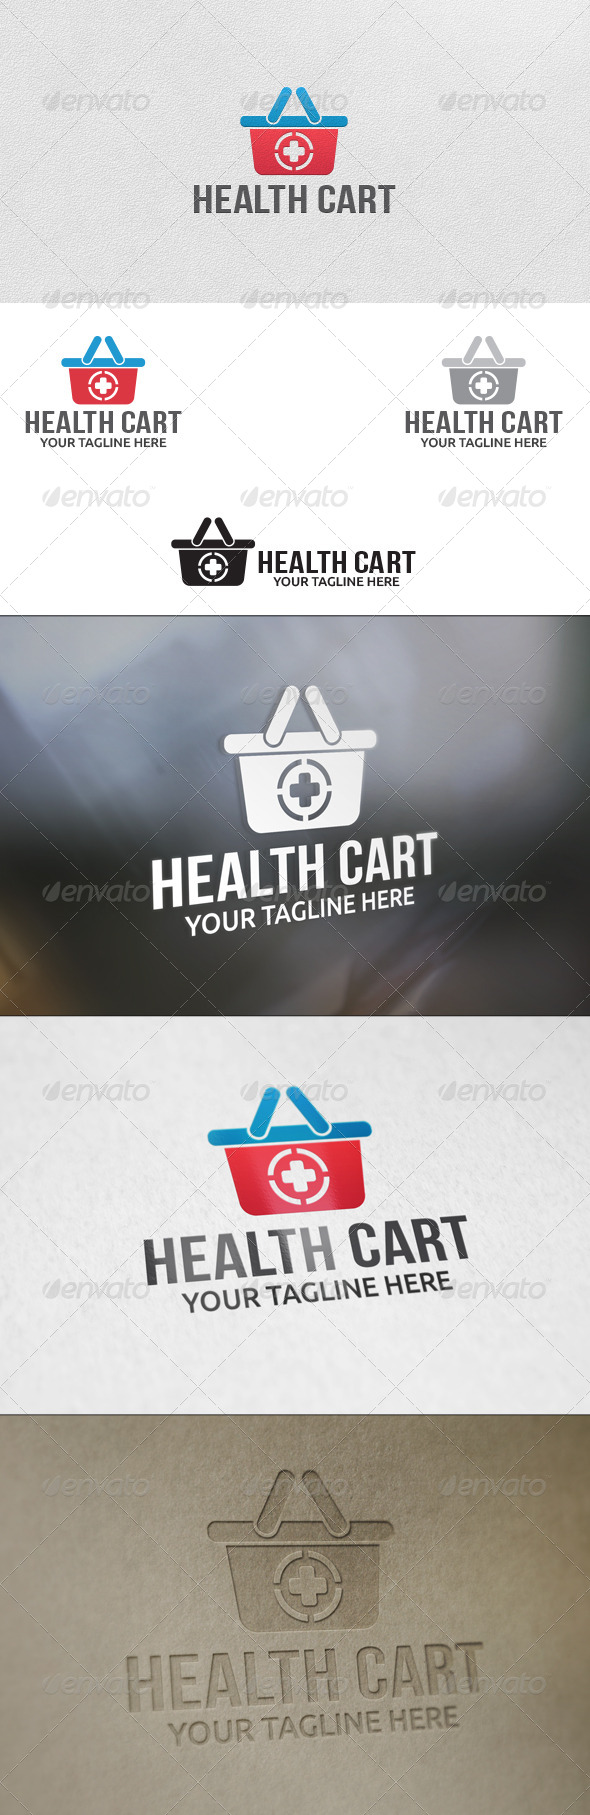 Health Cart - Logo Template